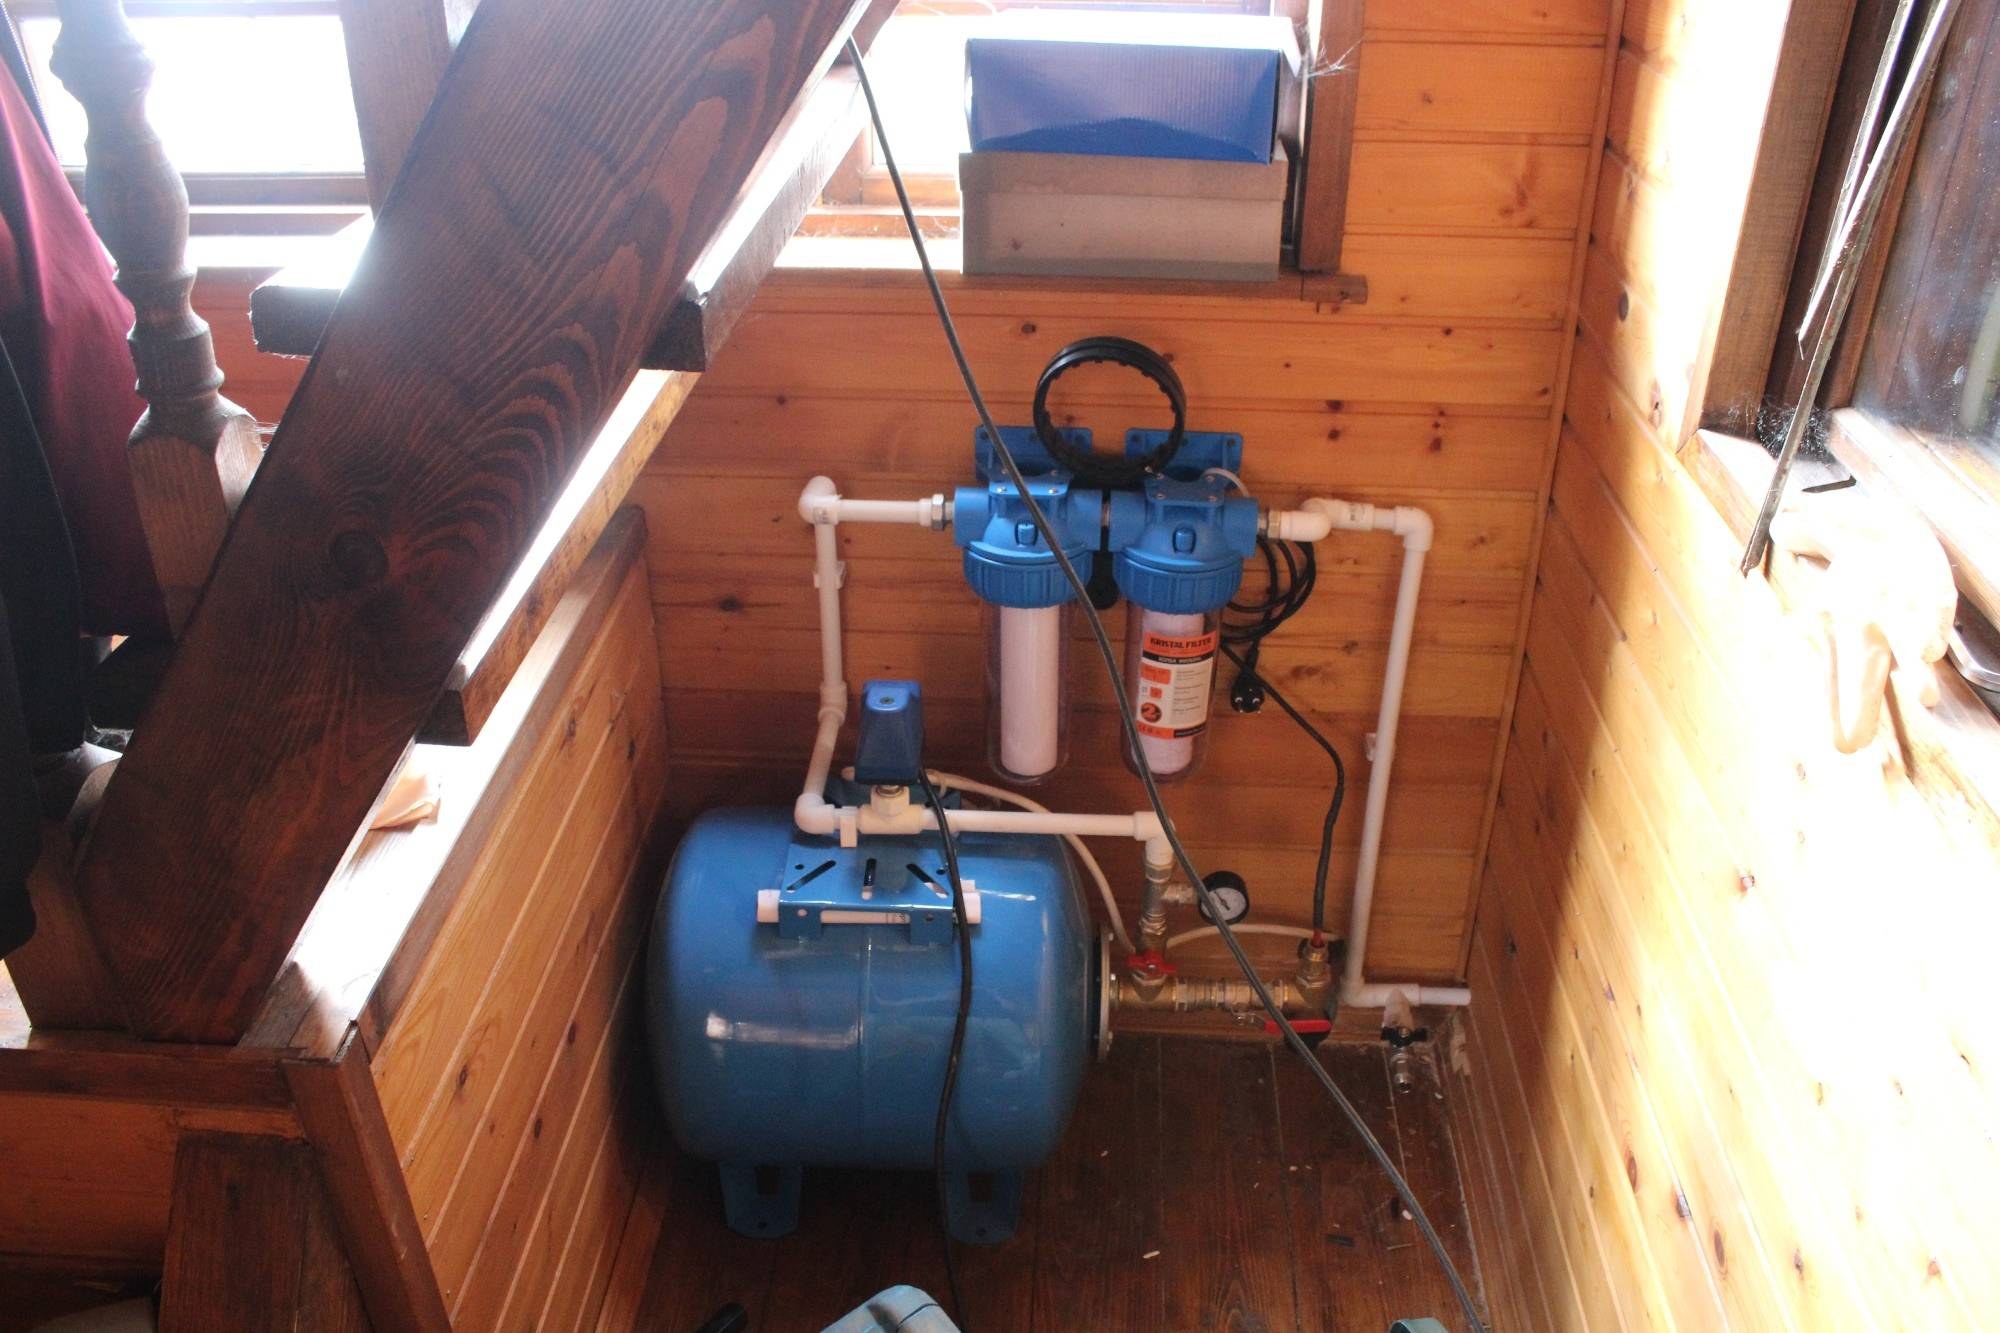 Организация подачи воды. Водоснабжение на даче. Монтаж водоснабжения на даче. Водопровод в частном доме. Автономное водоснабжение на даче.